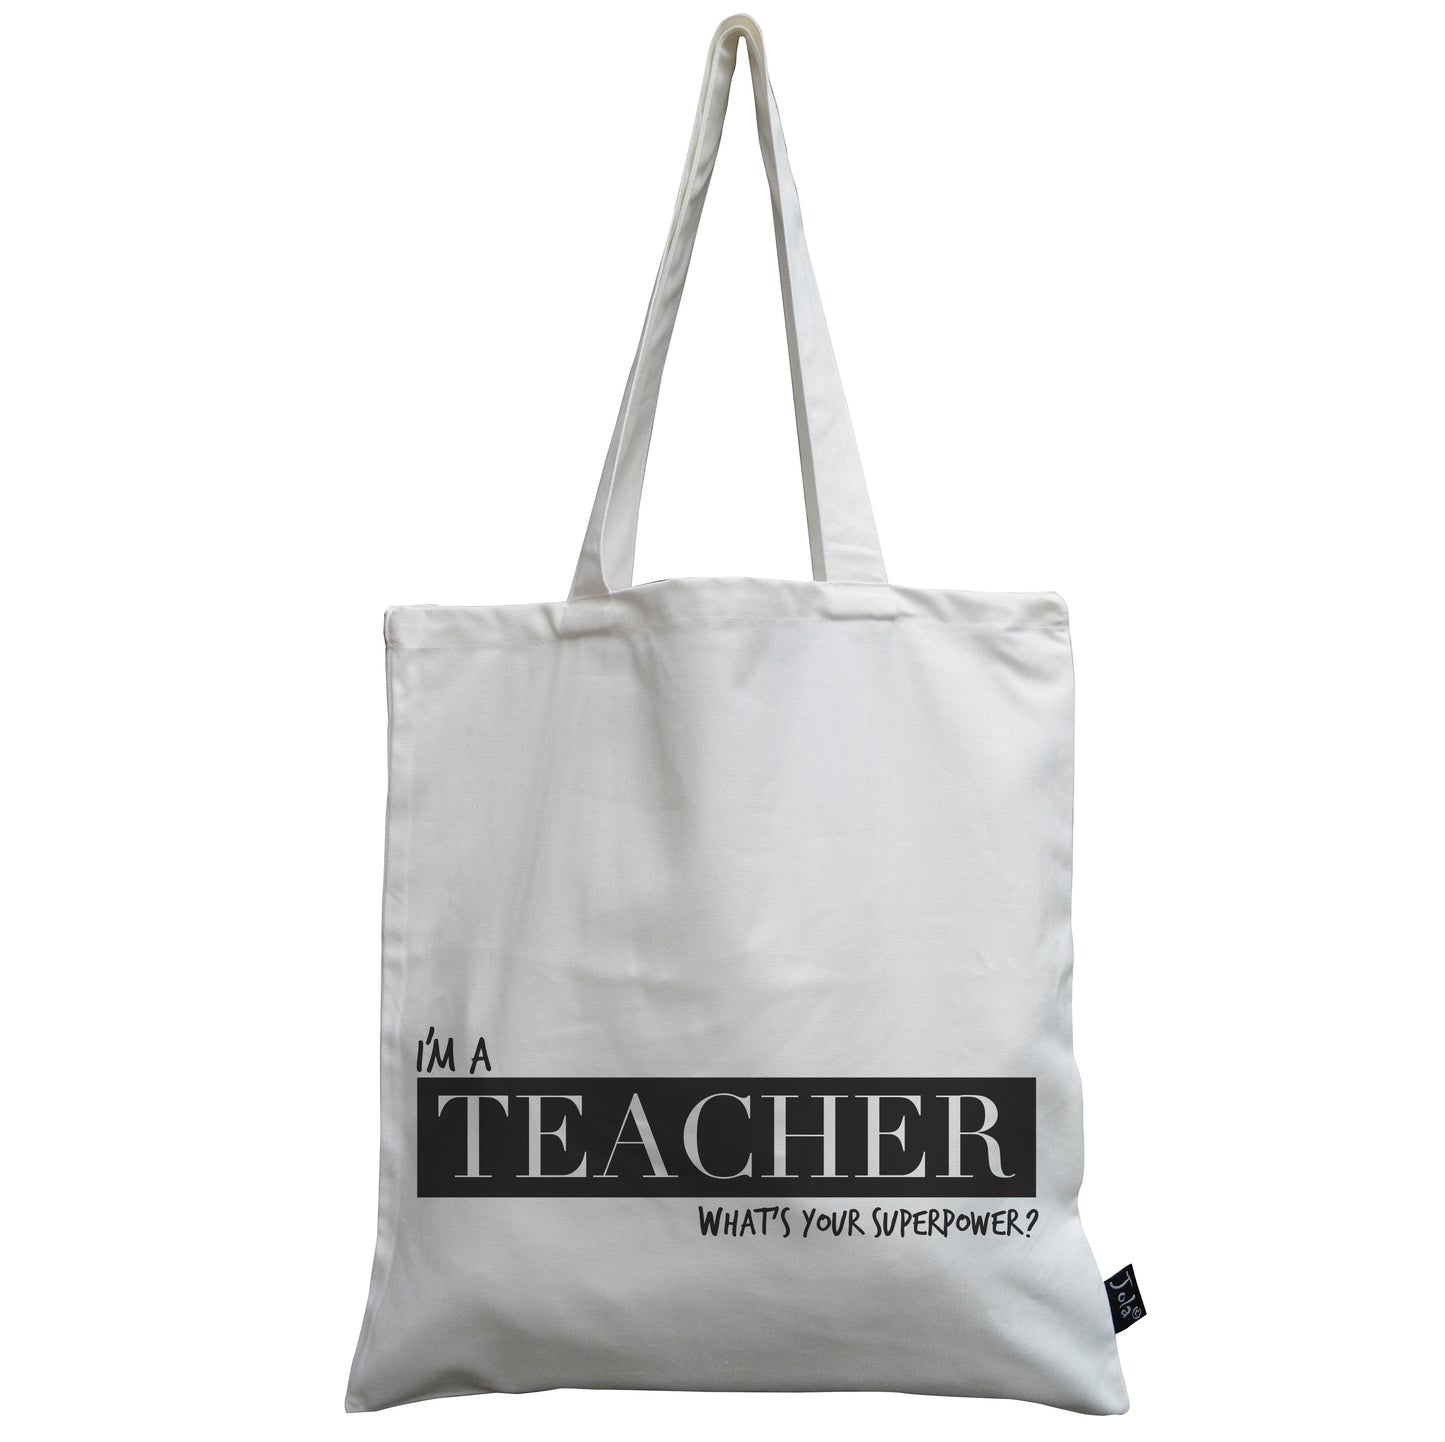 Teacher superpower canvas bag